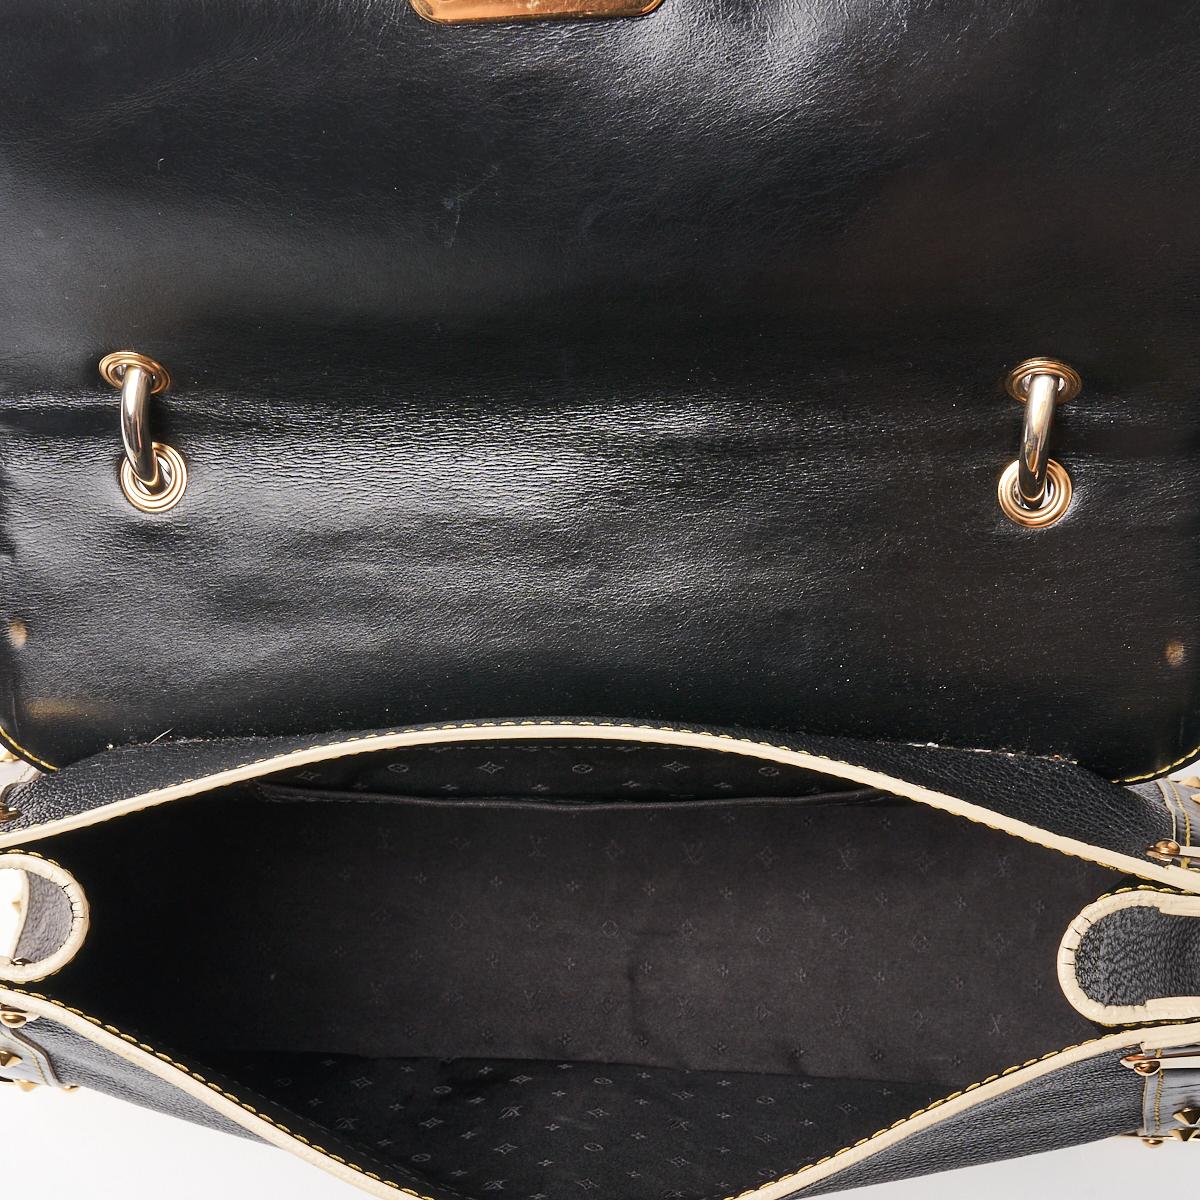 Sold at Auction: Black Suhali Goat Leather Louis Vuitton 'Lockit